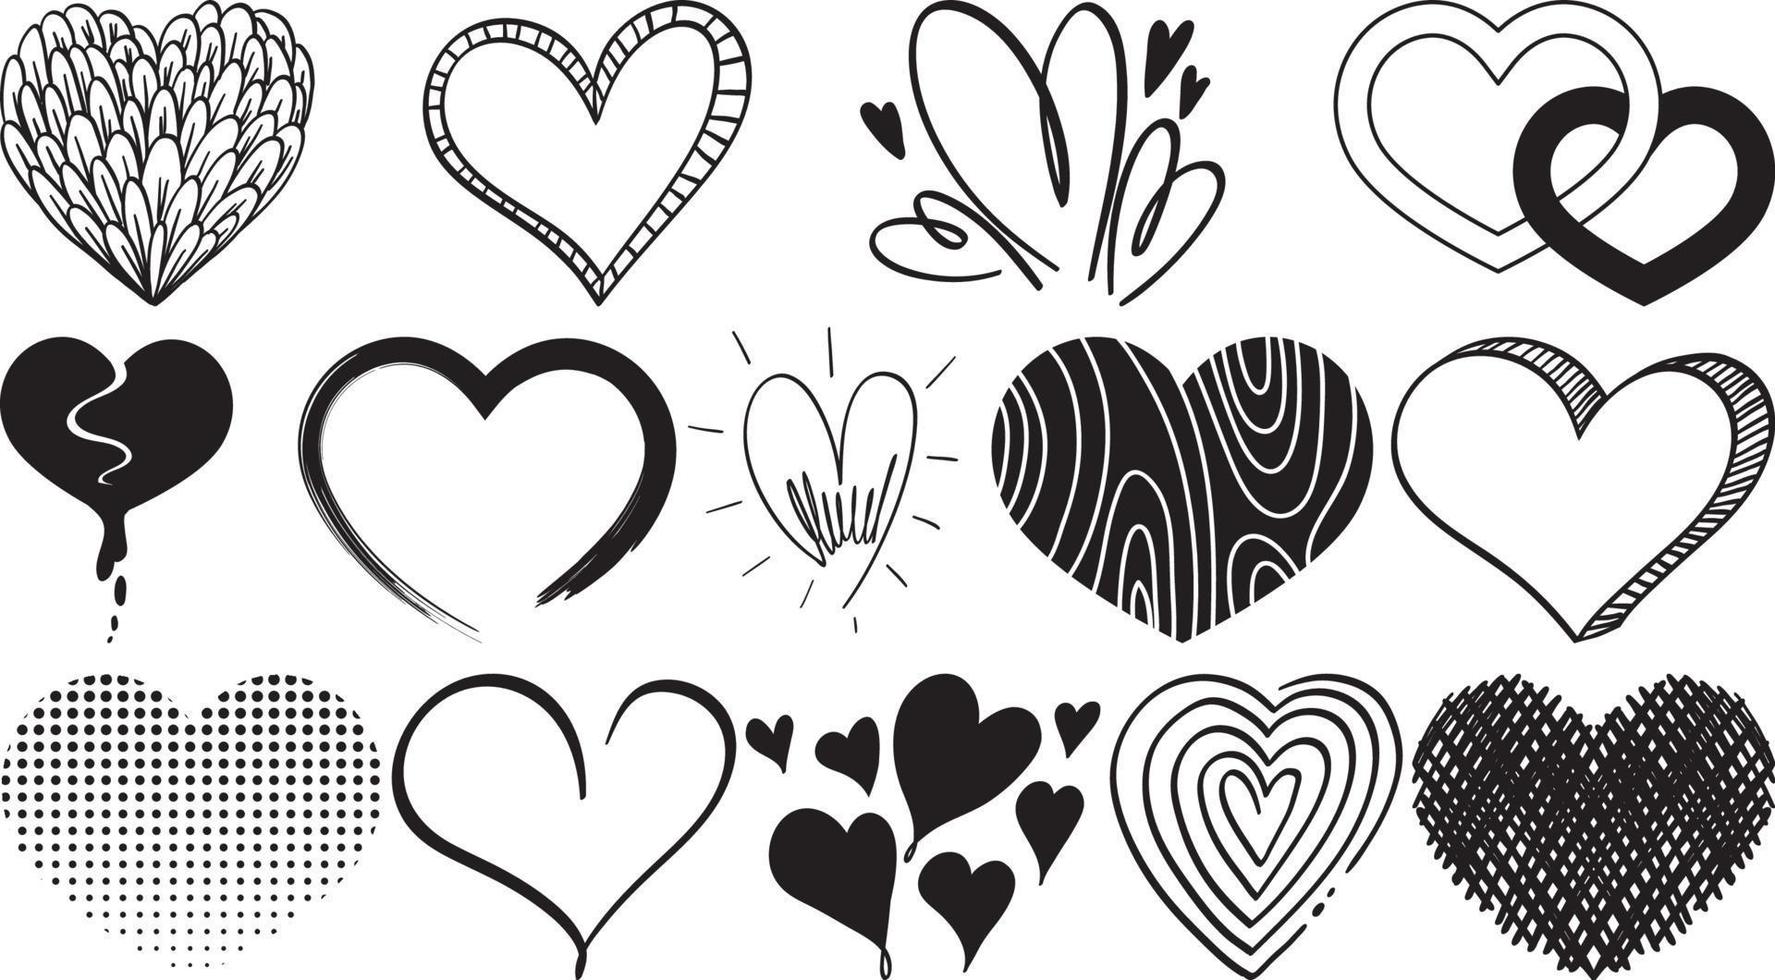 Black hand drawn hearts set vector